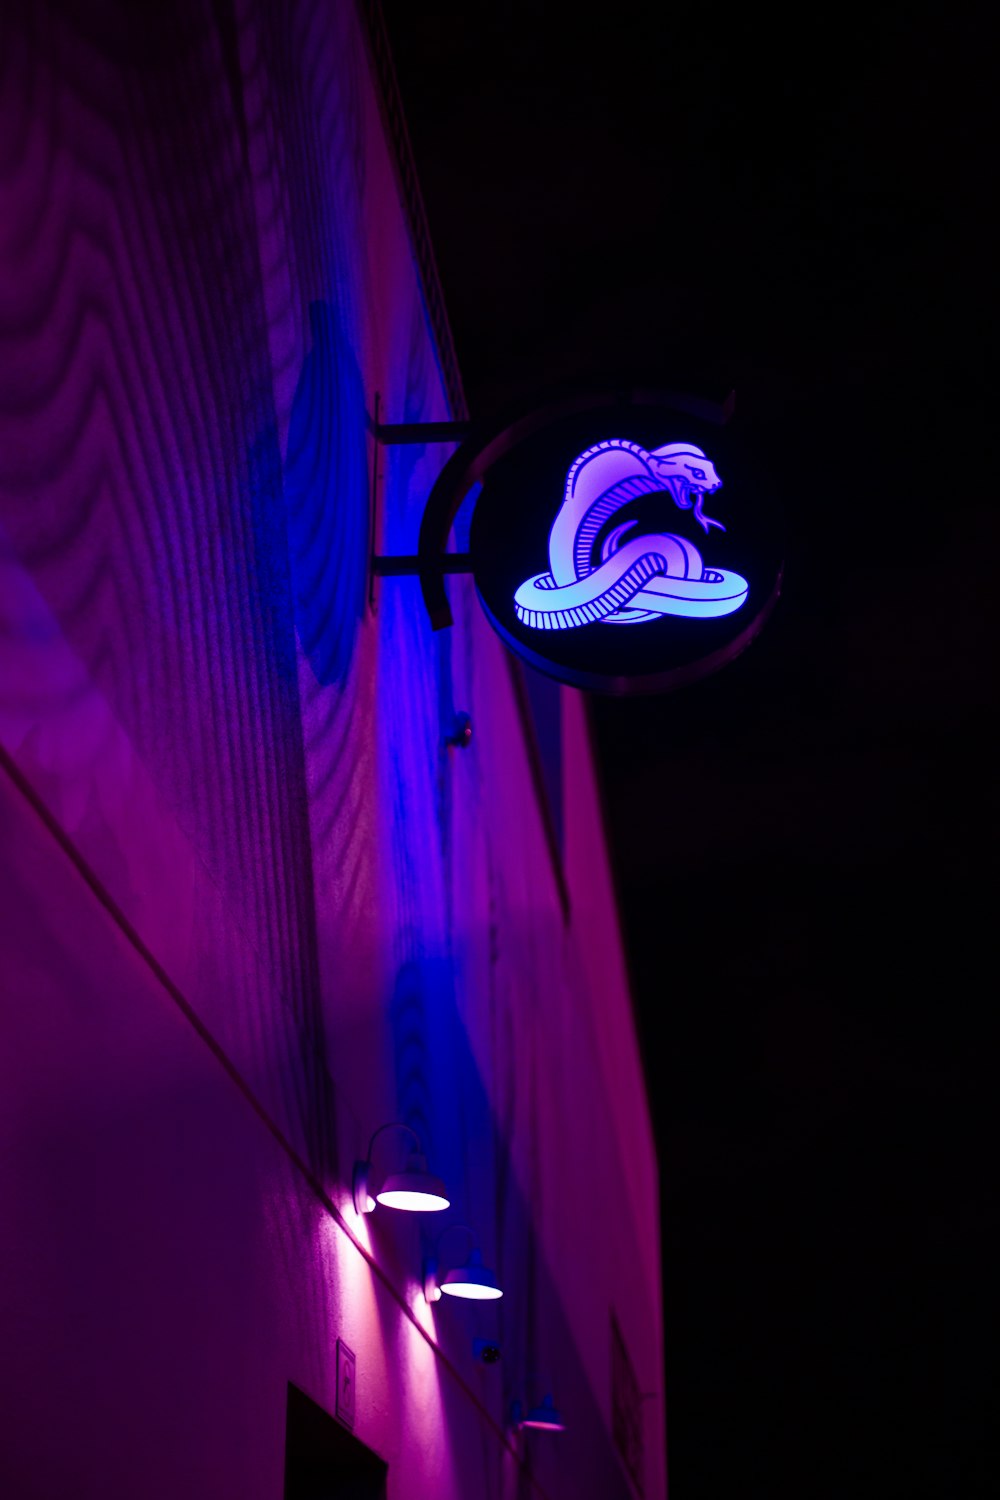 purple light bulb turned on during nighttime